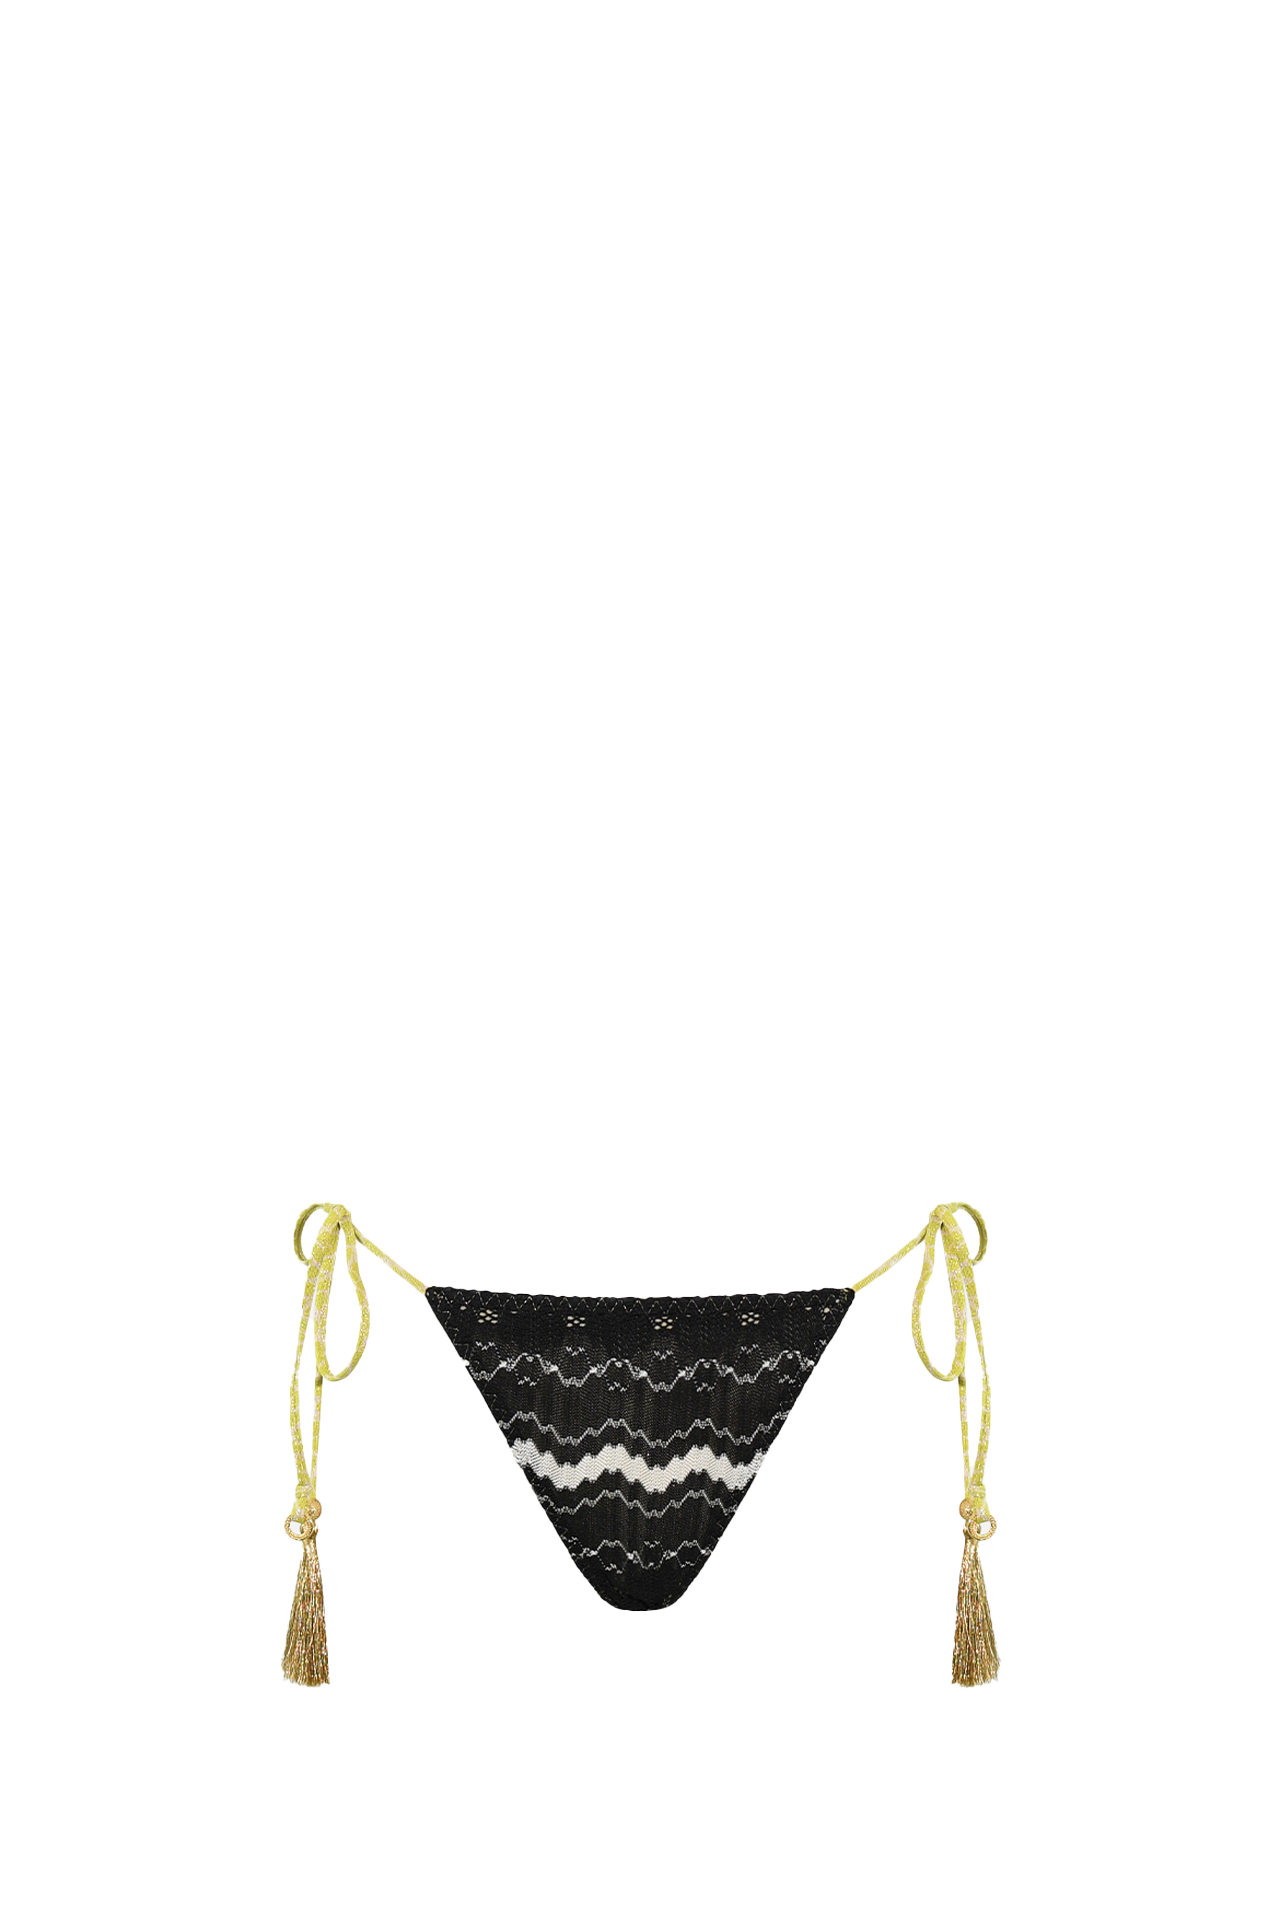 Black White Knit Reversible Triangle Bikini - Bottom